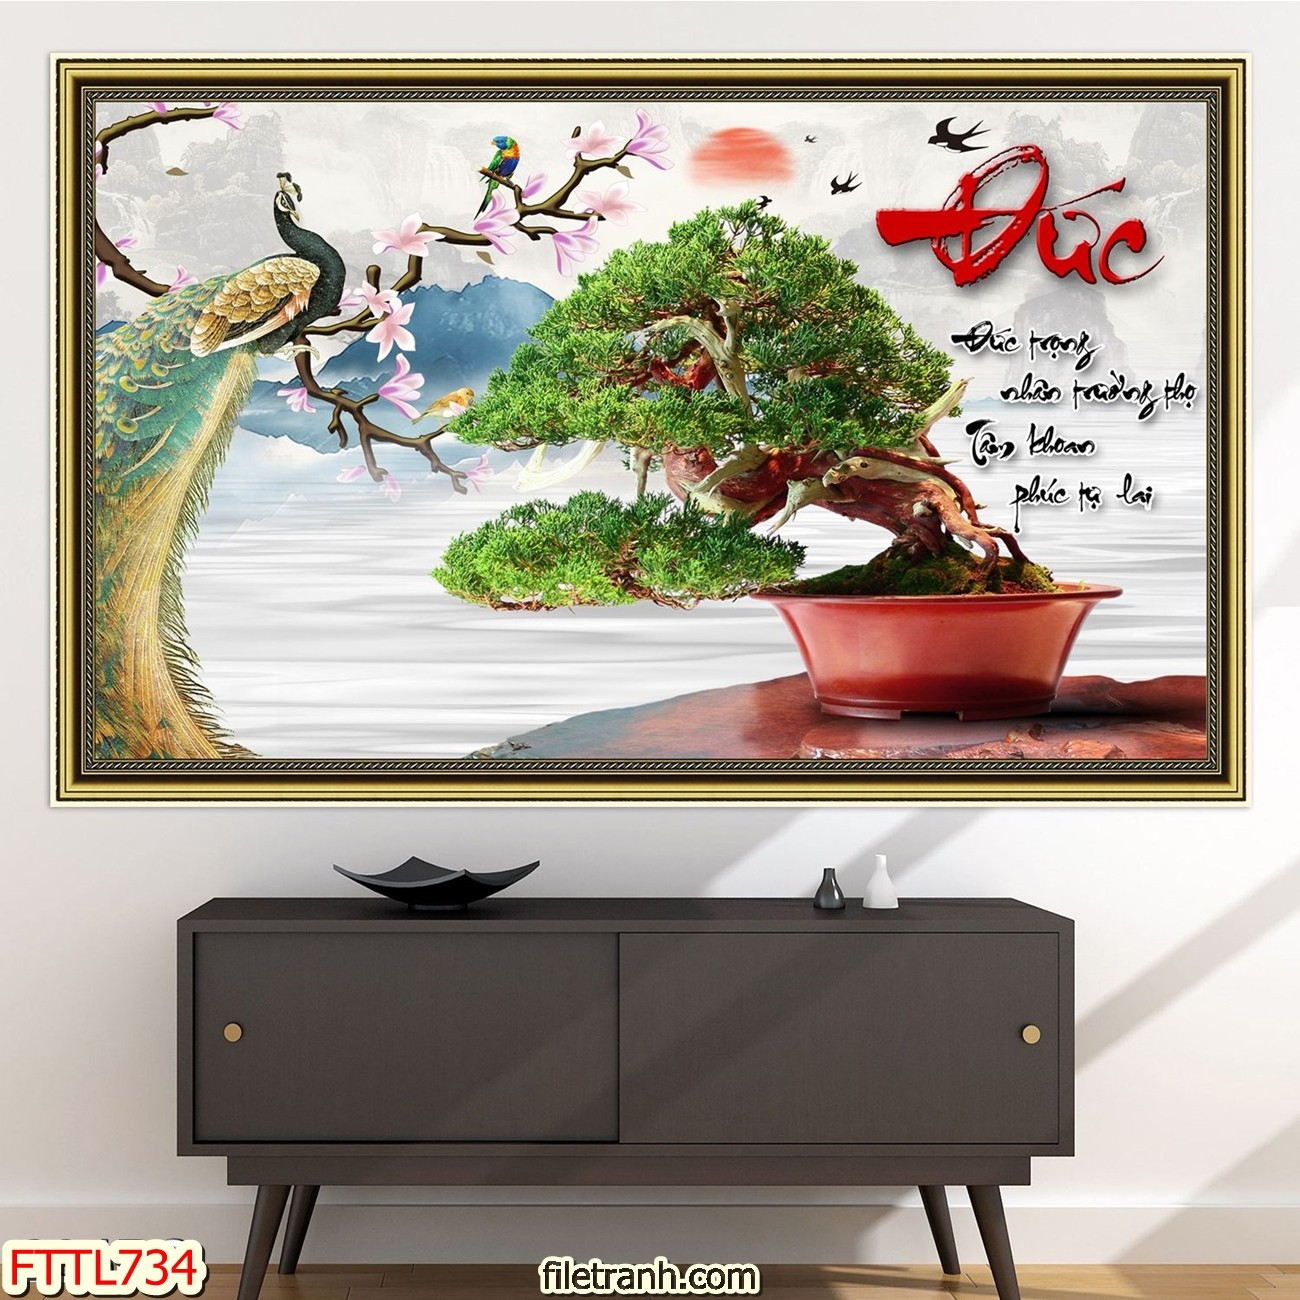 https://filetranh.com/file-tranh-chau-mai-bonsai/file-tranh-chau-mai-bonsai-fttl734.html